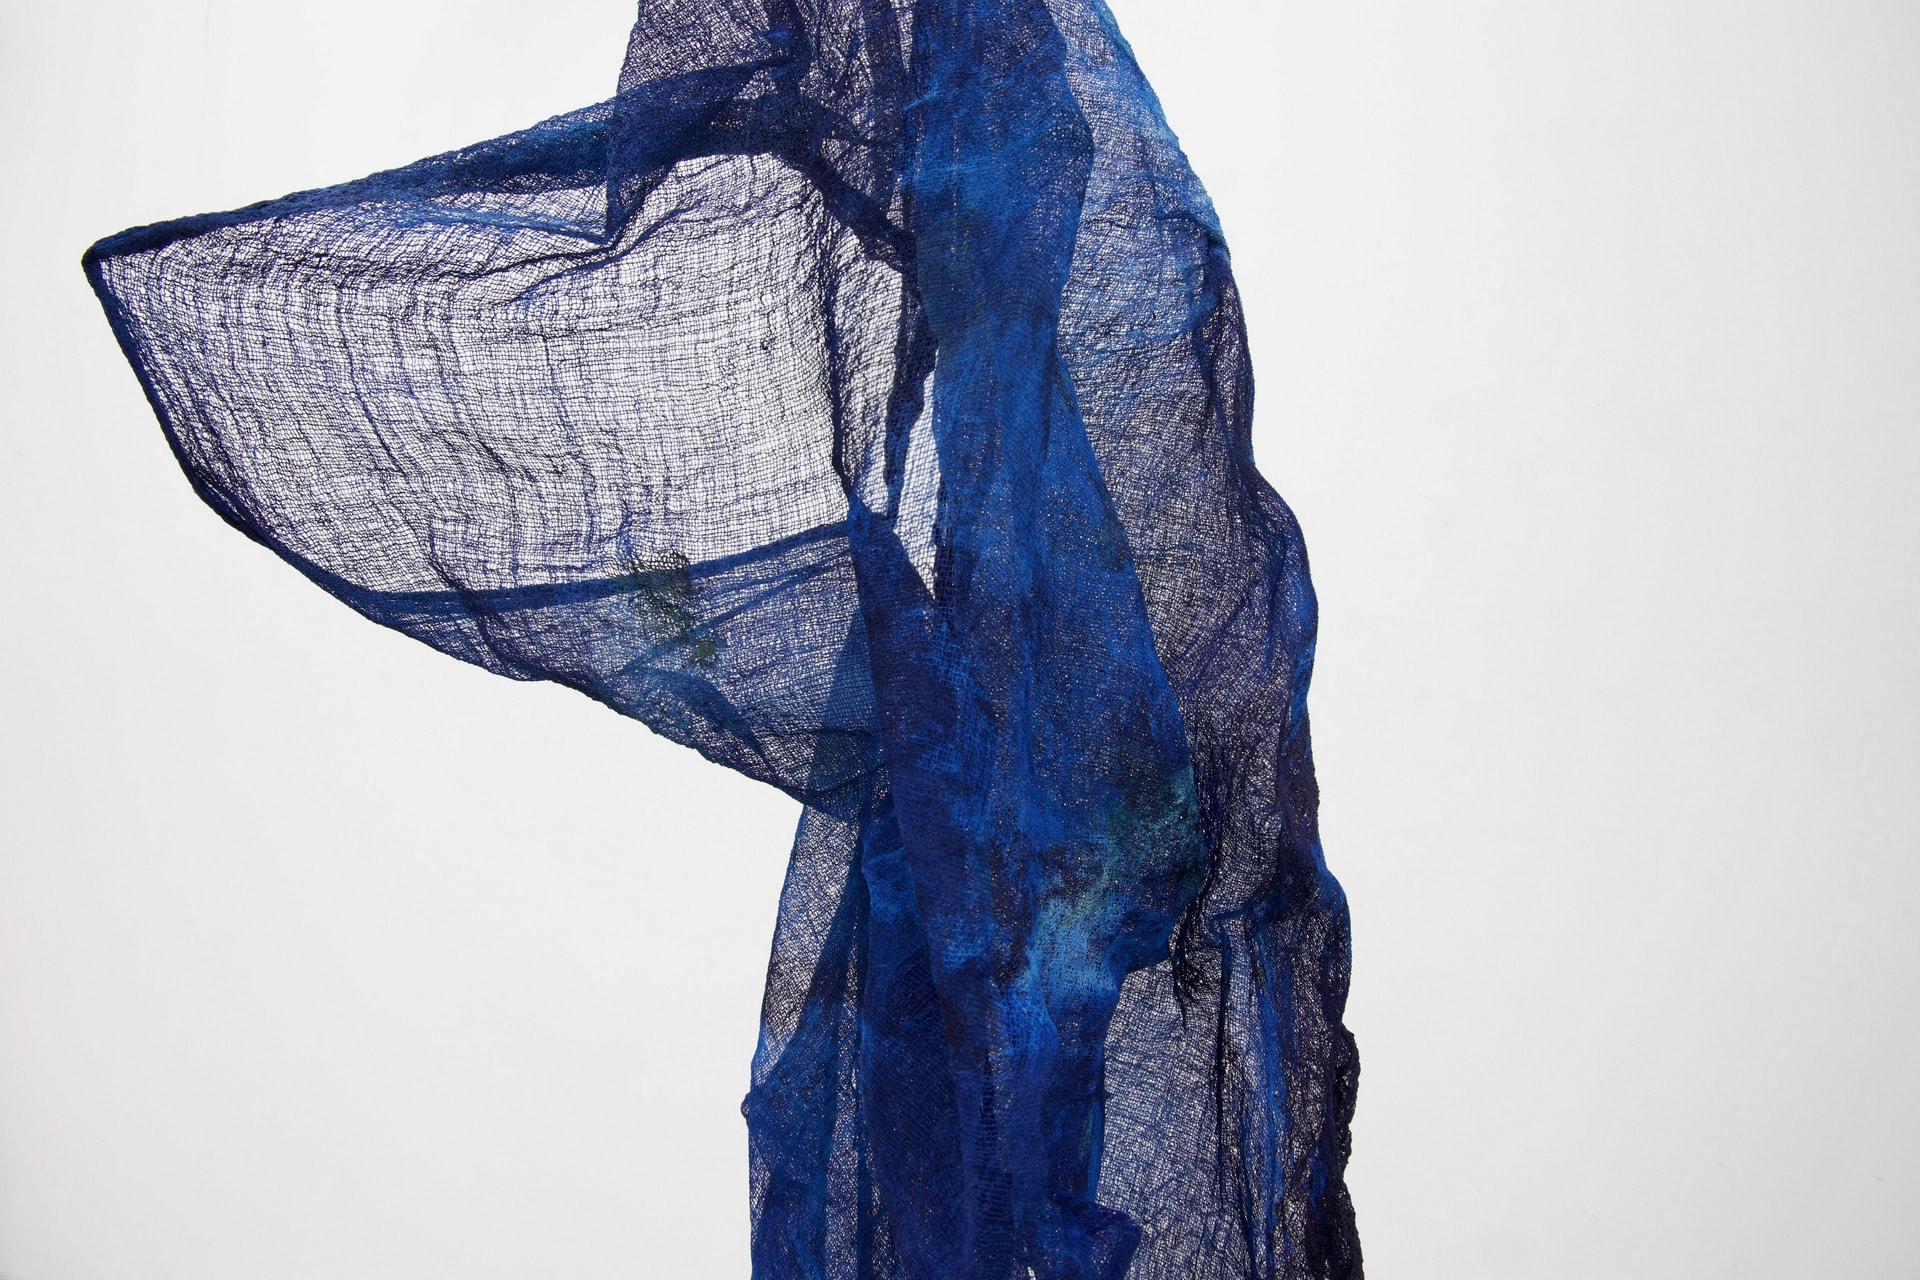 detail of fabric blue sculpture